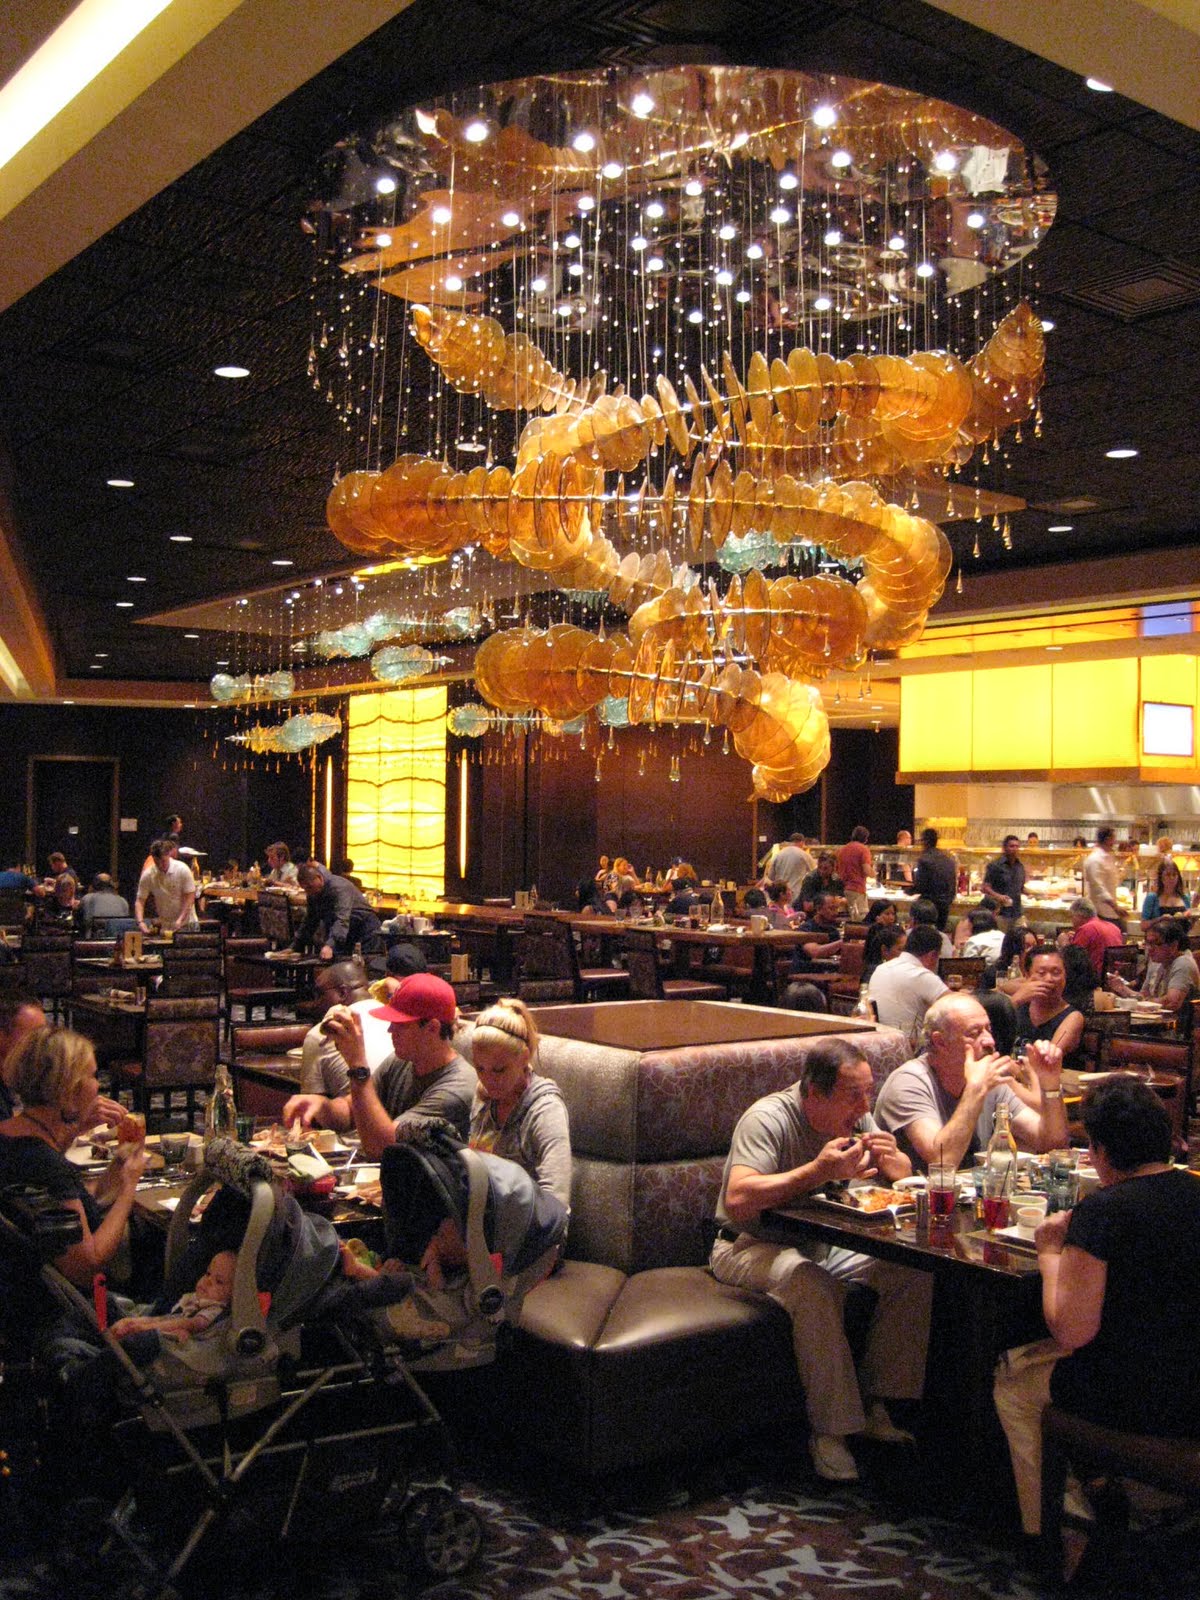 GourmetGorro: The Las Vegas Epic 2011 - The Wicked Spoon buffet